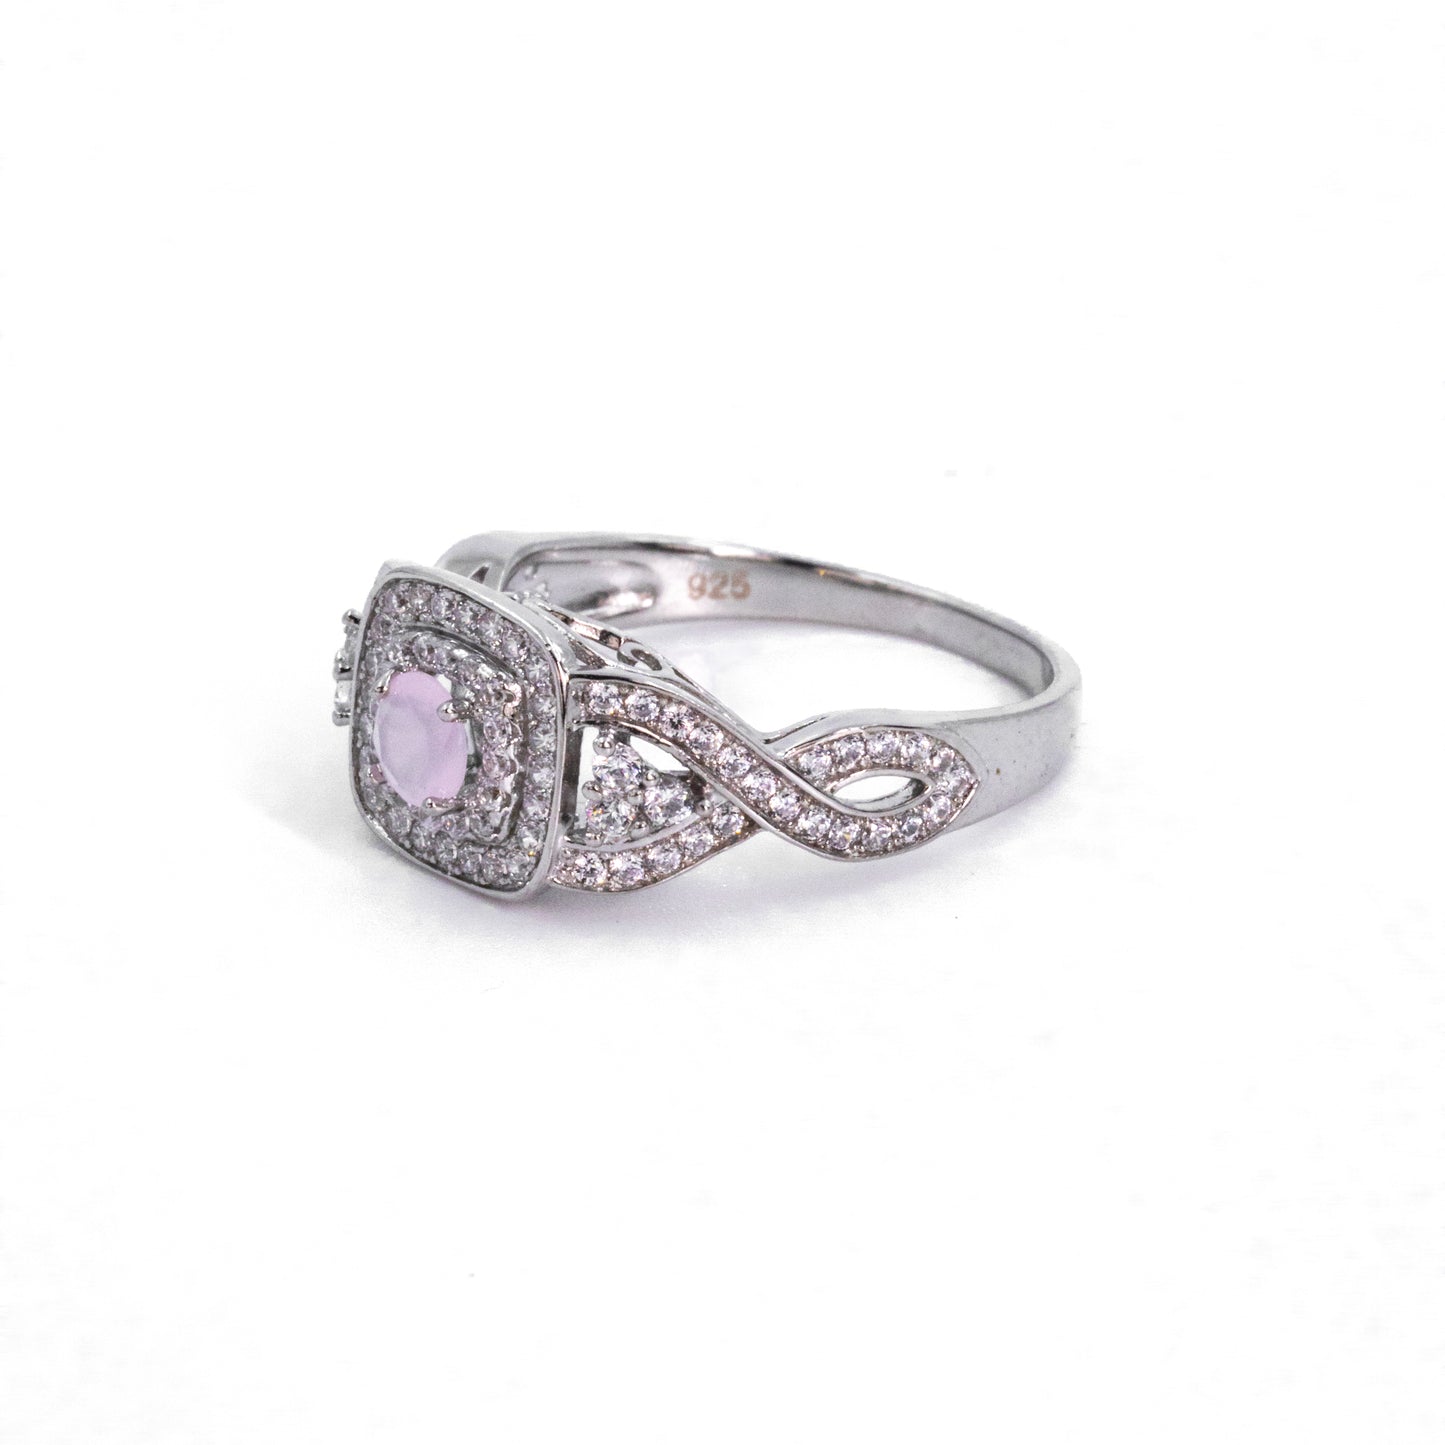 Silver Pastel Pink Stone Ring